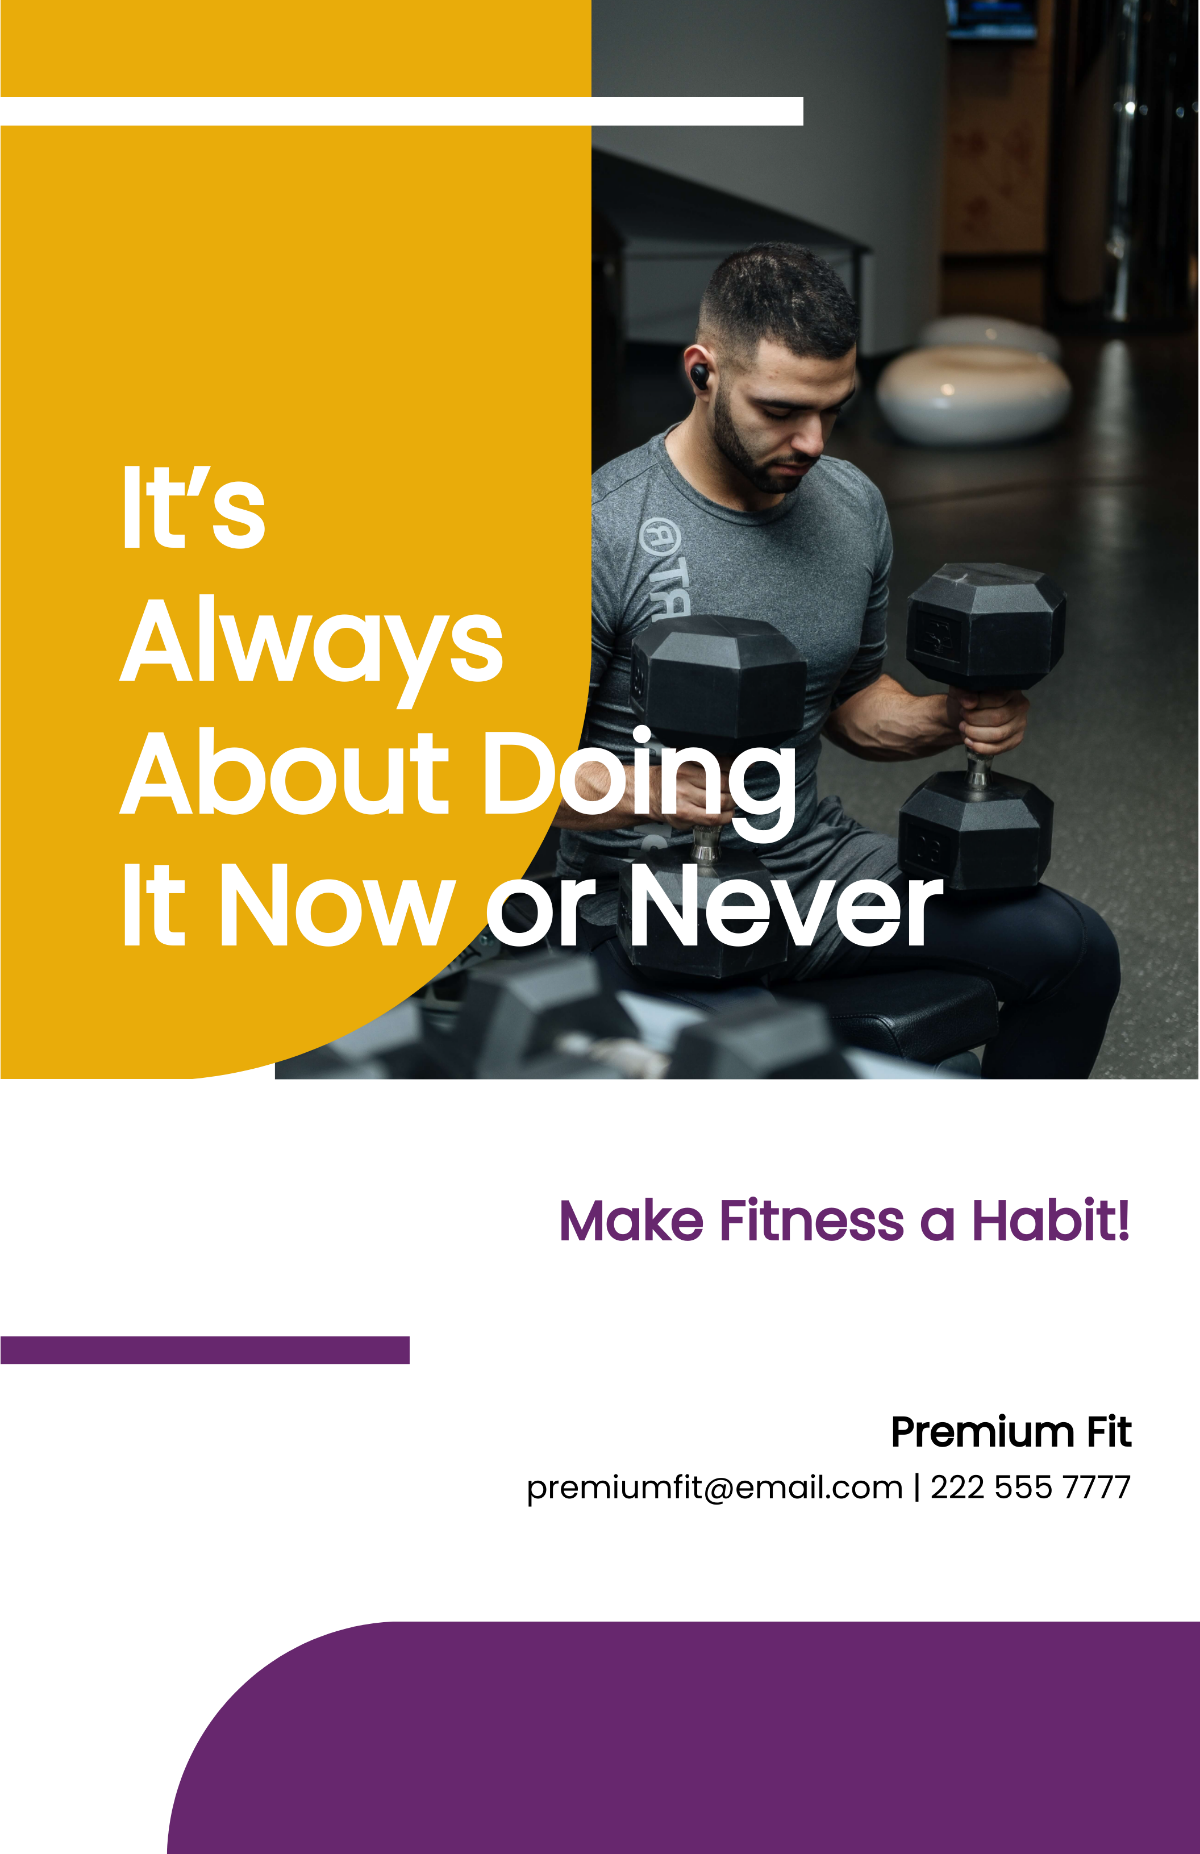 Fitness Motivational Poster